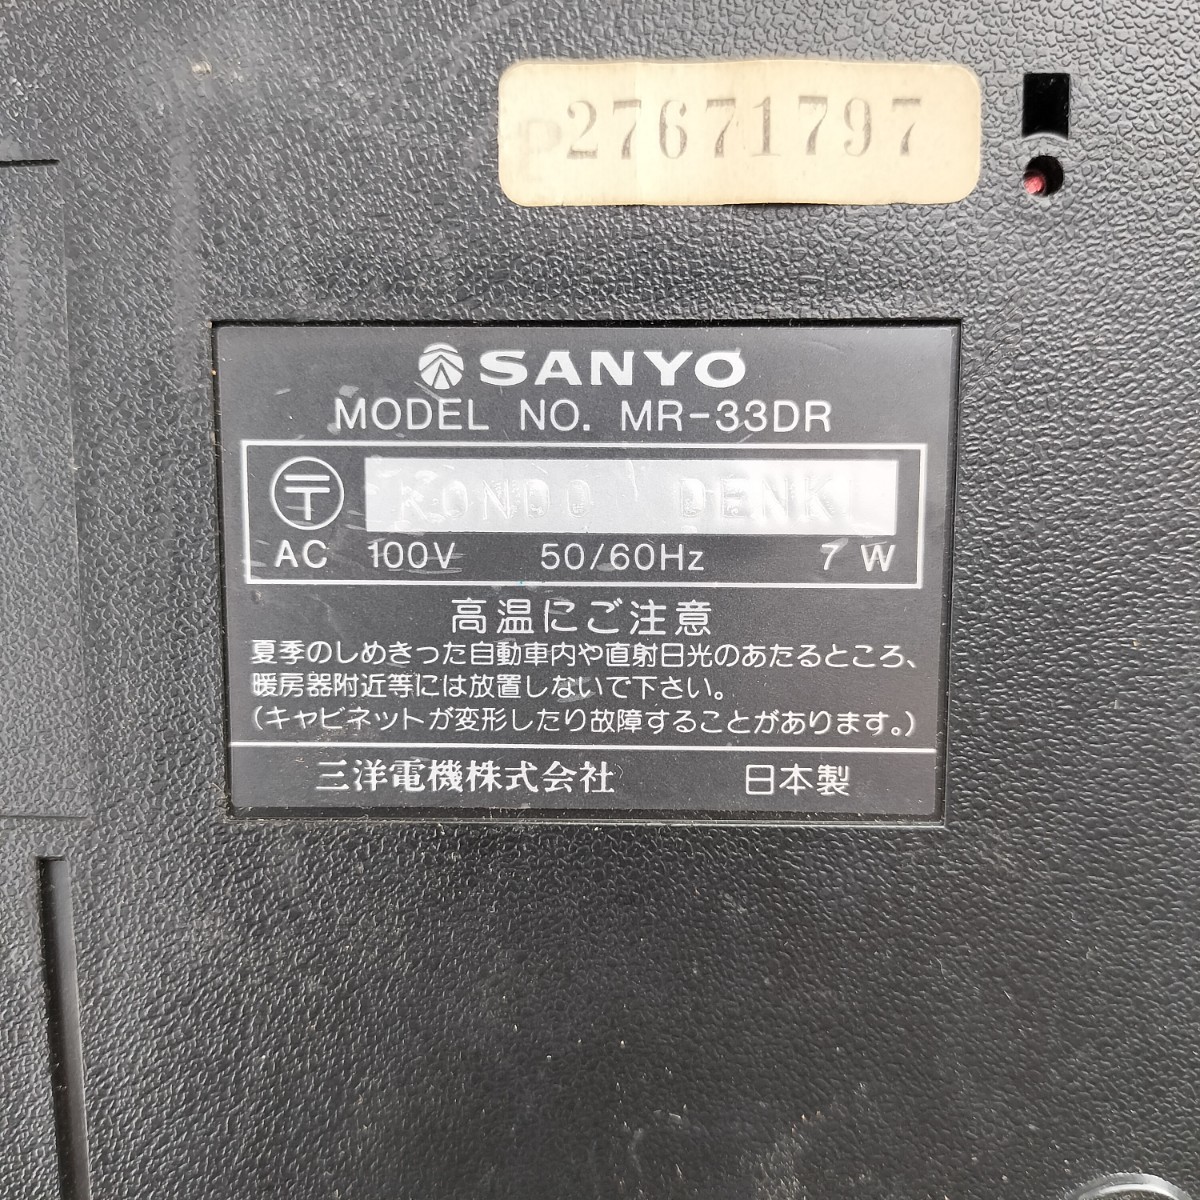 SANYO/ Sanyo data recorder MR-33DR body only 60228-13